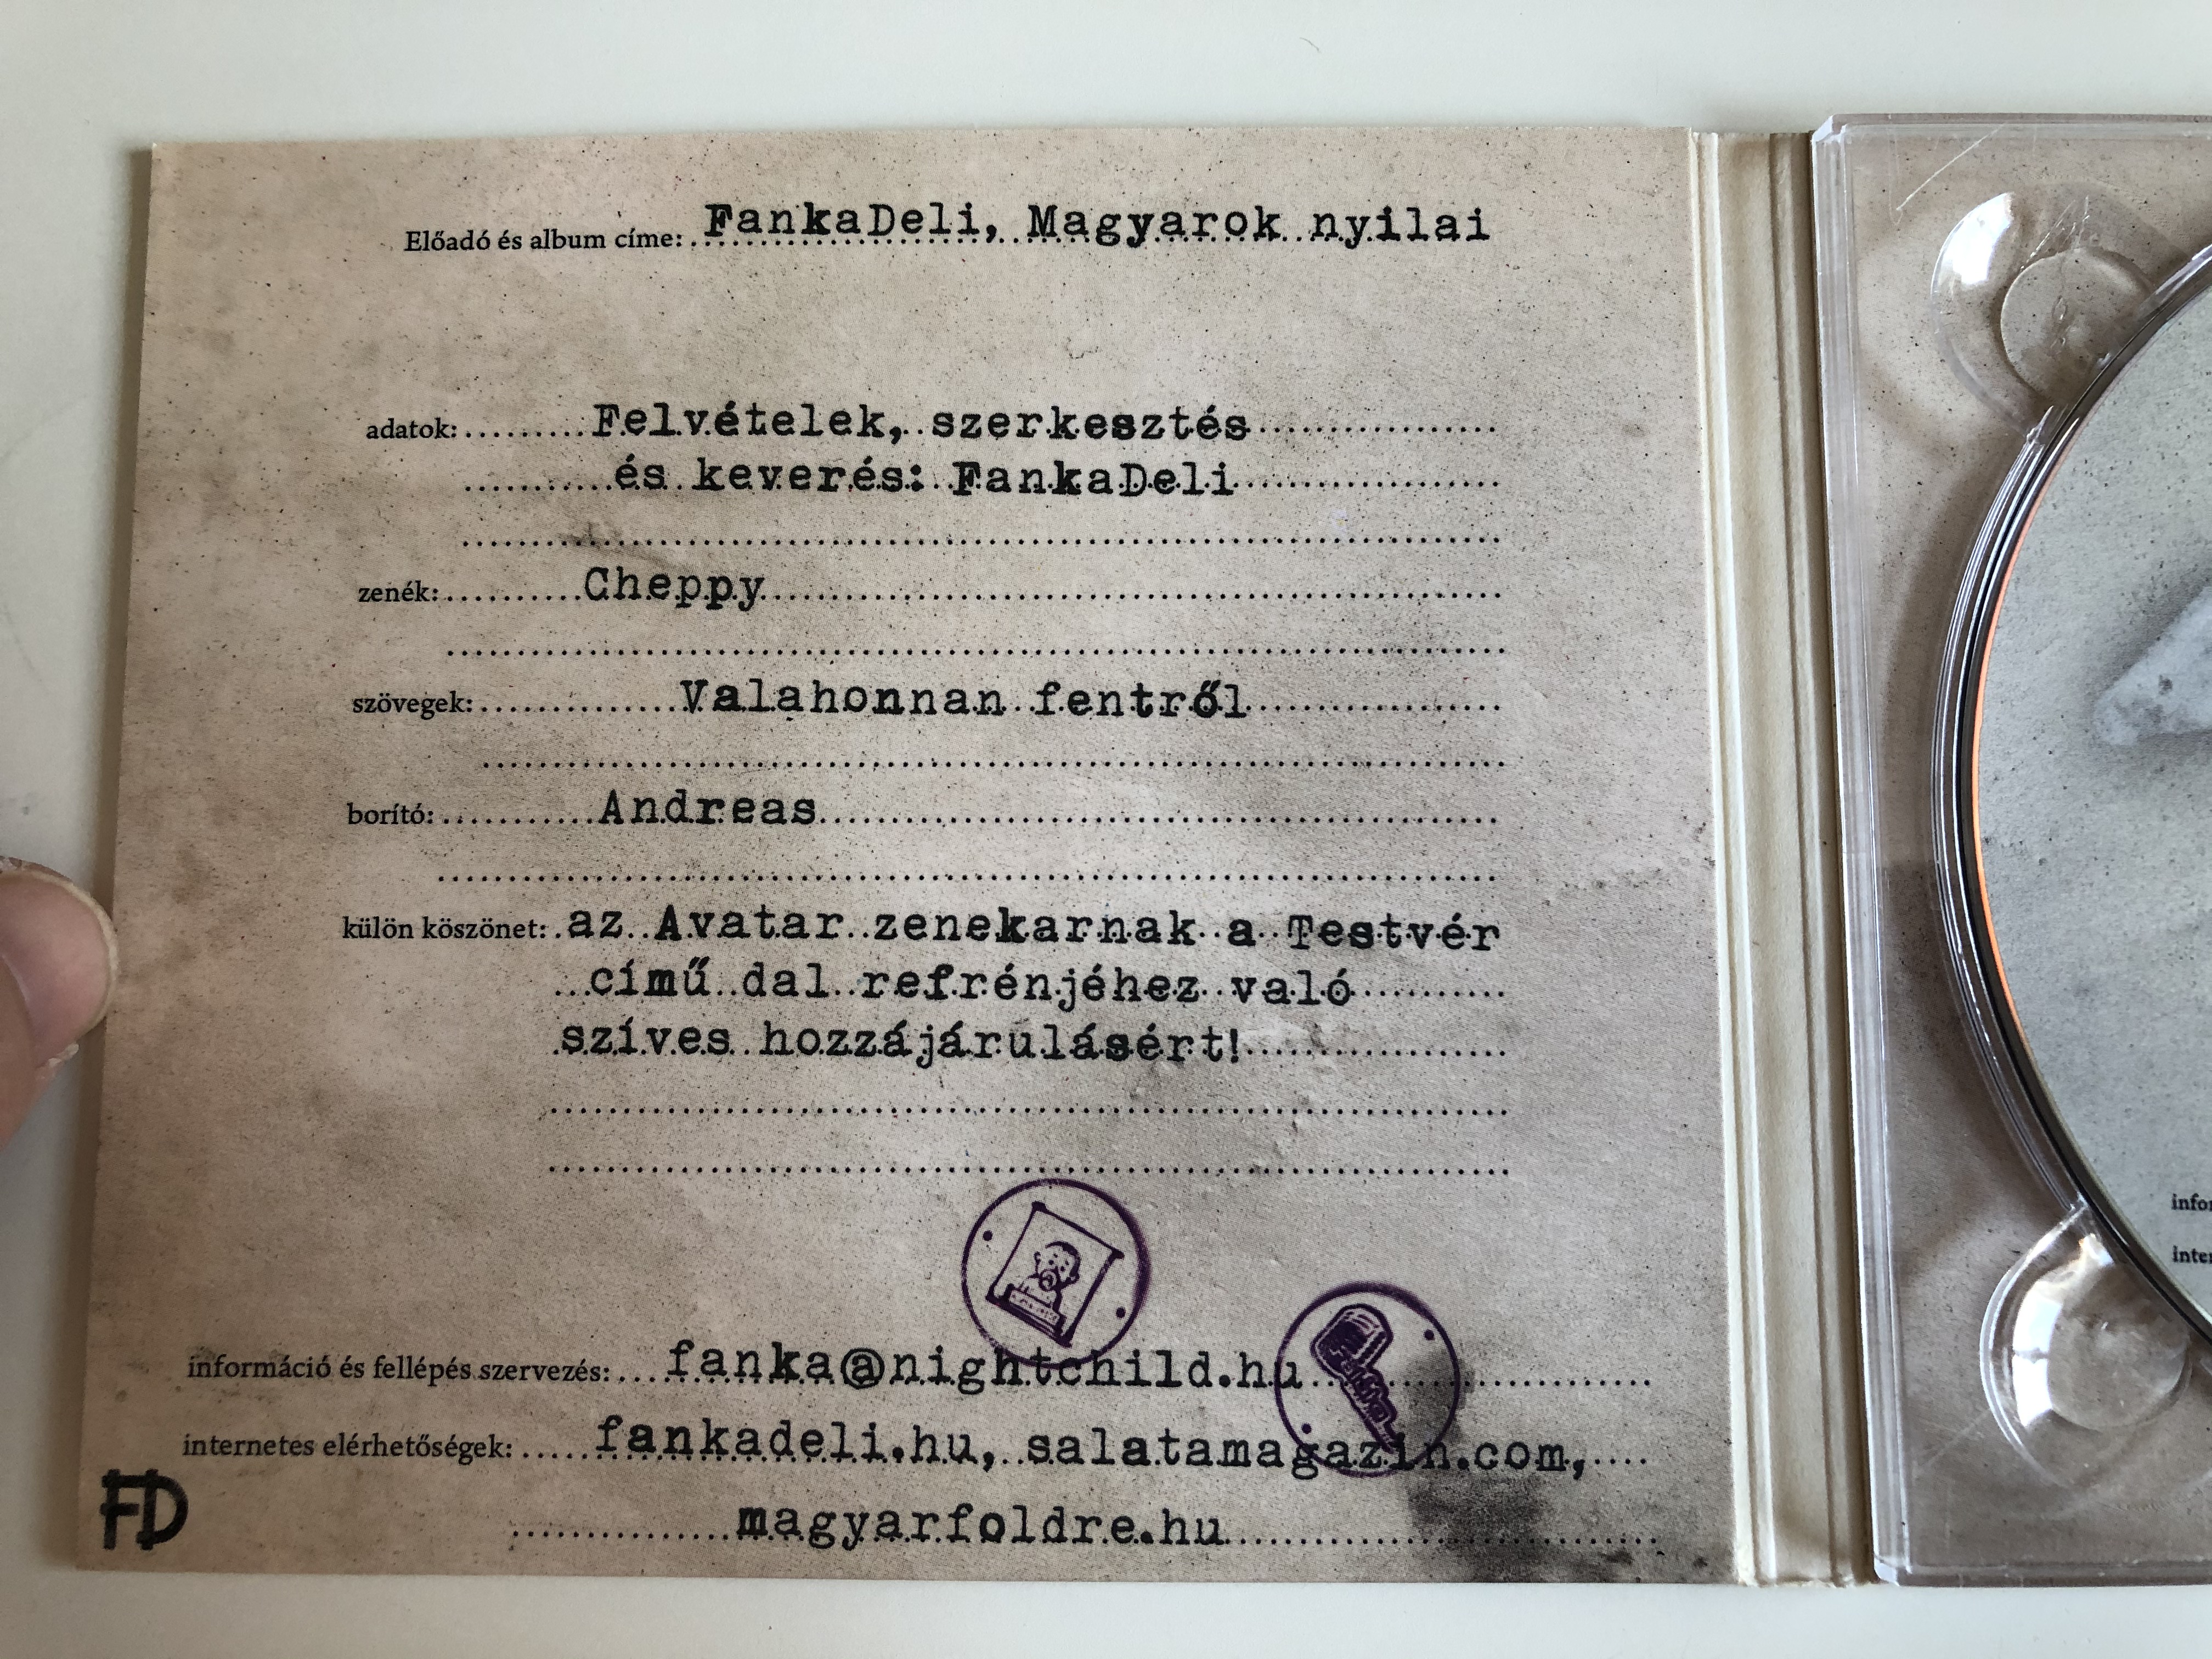 eloado-fankadeli-album-cime-magyarok-nyilai-kelt-2010...ho-03..nap-15-fankadeli-audio-cd-2010-5999881926132-2-.jpg